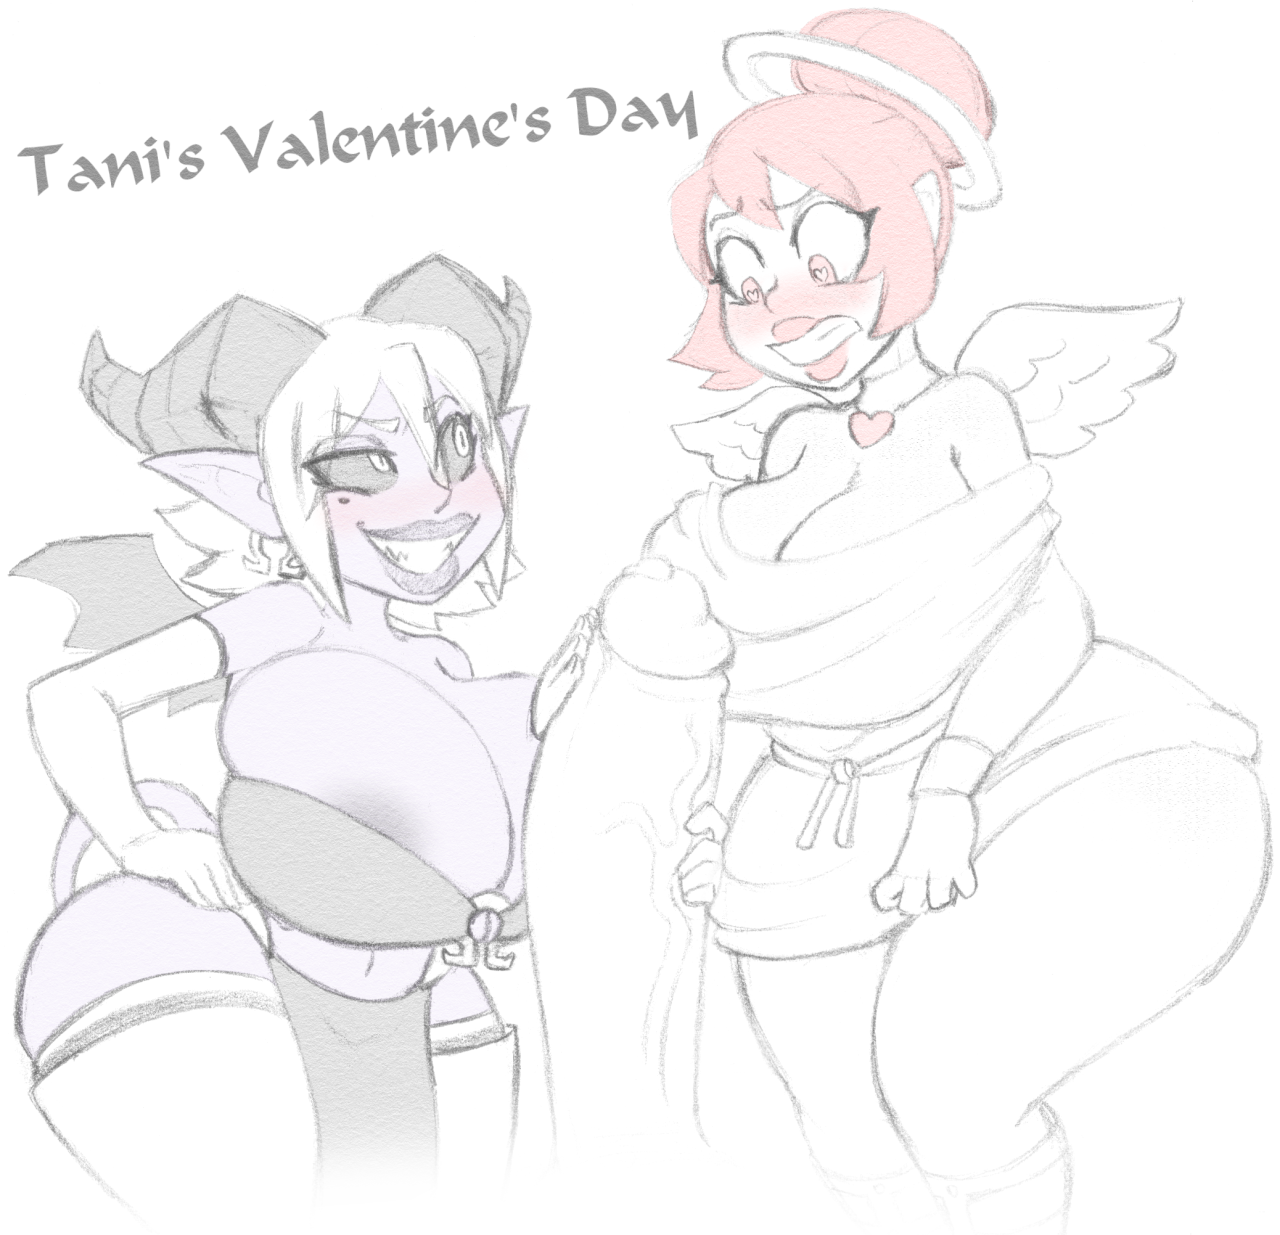 Tani’s Valentine’s Day